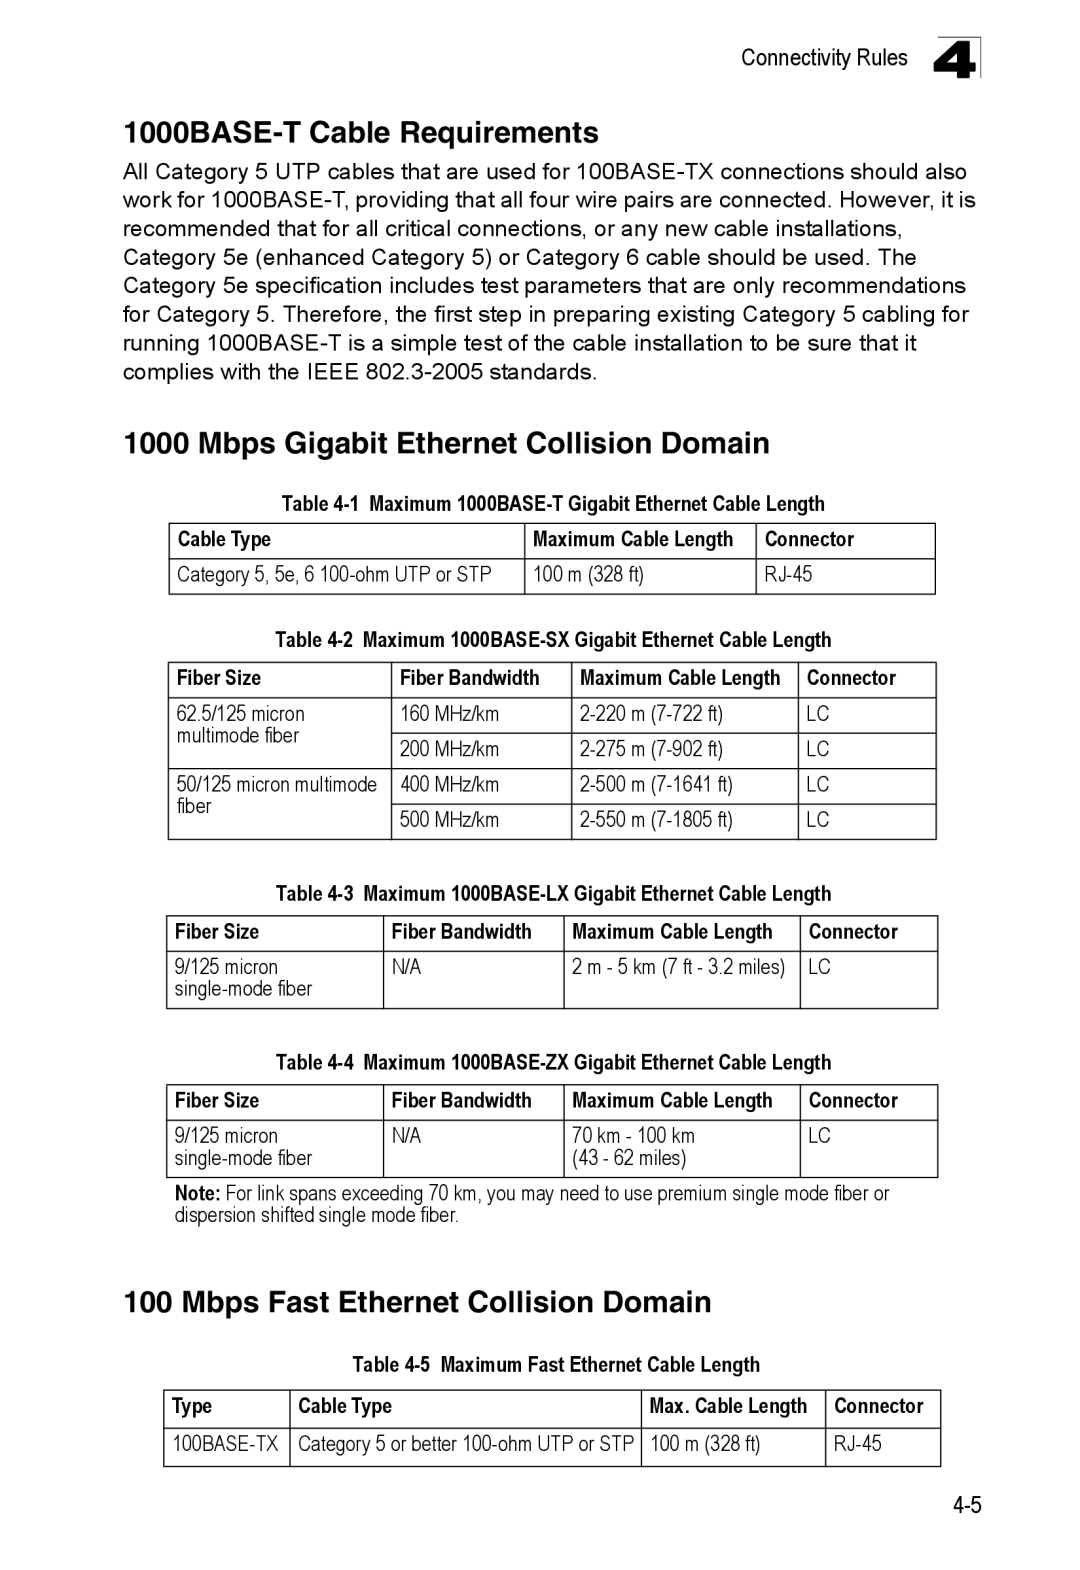 SMC Networks SMC8126PL2-F 1000BASE-TCable Requirements, Mbps Gigabit Ethernet Collision Domain, Cable Type, Connector 